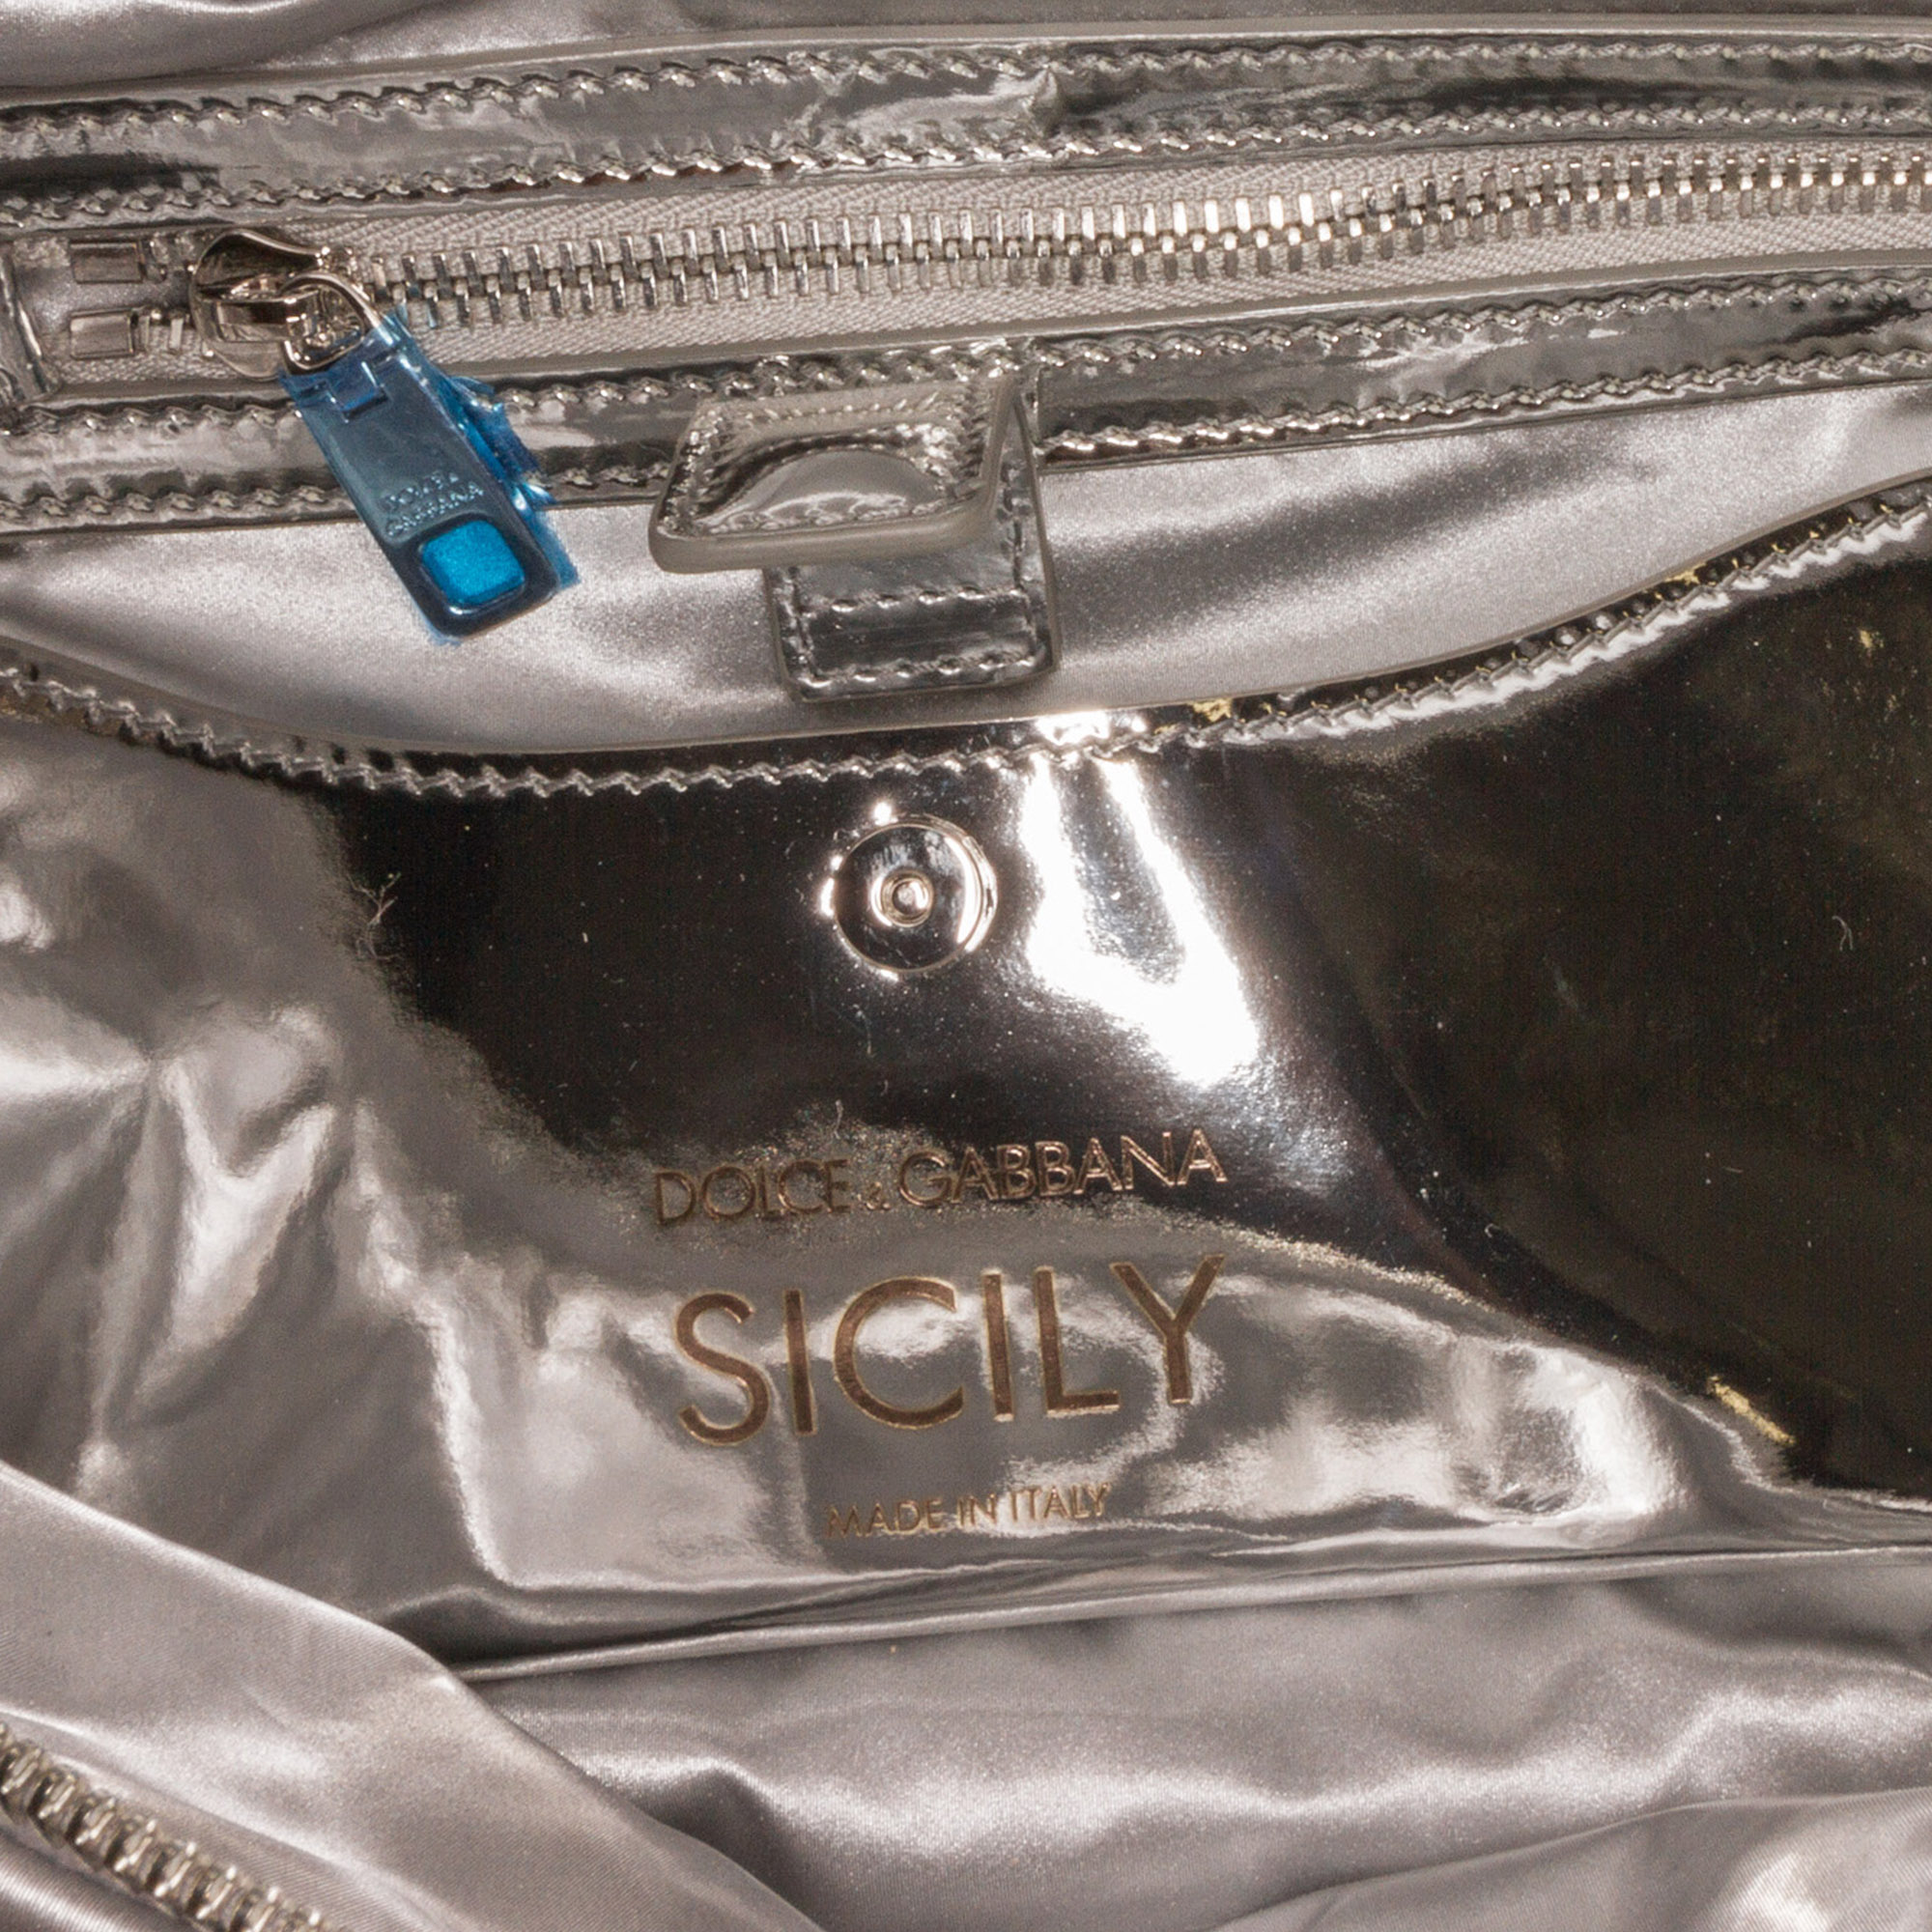 Dolce & Gabbana Silver Miss Sicily Belt Bag